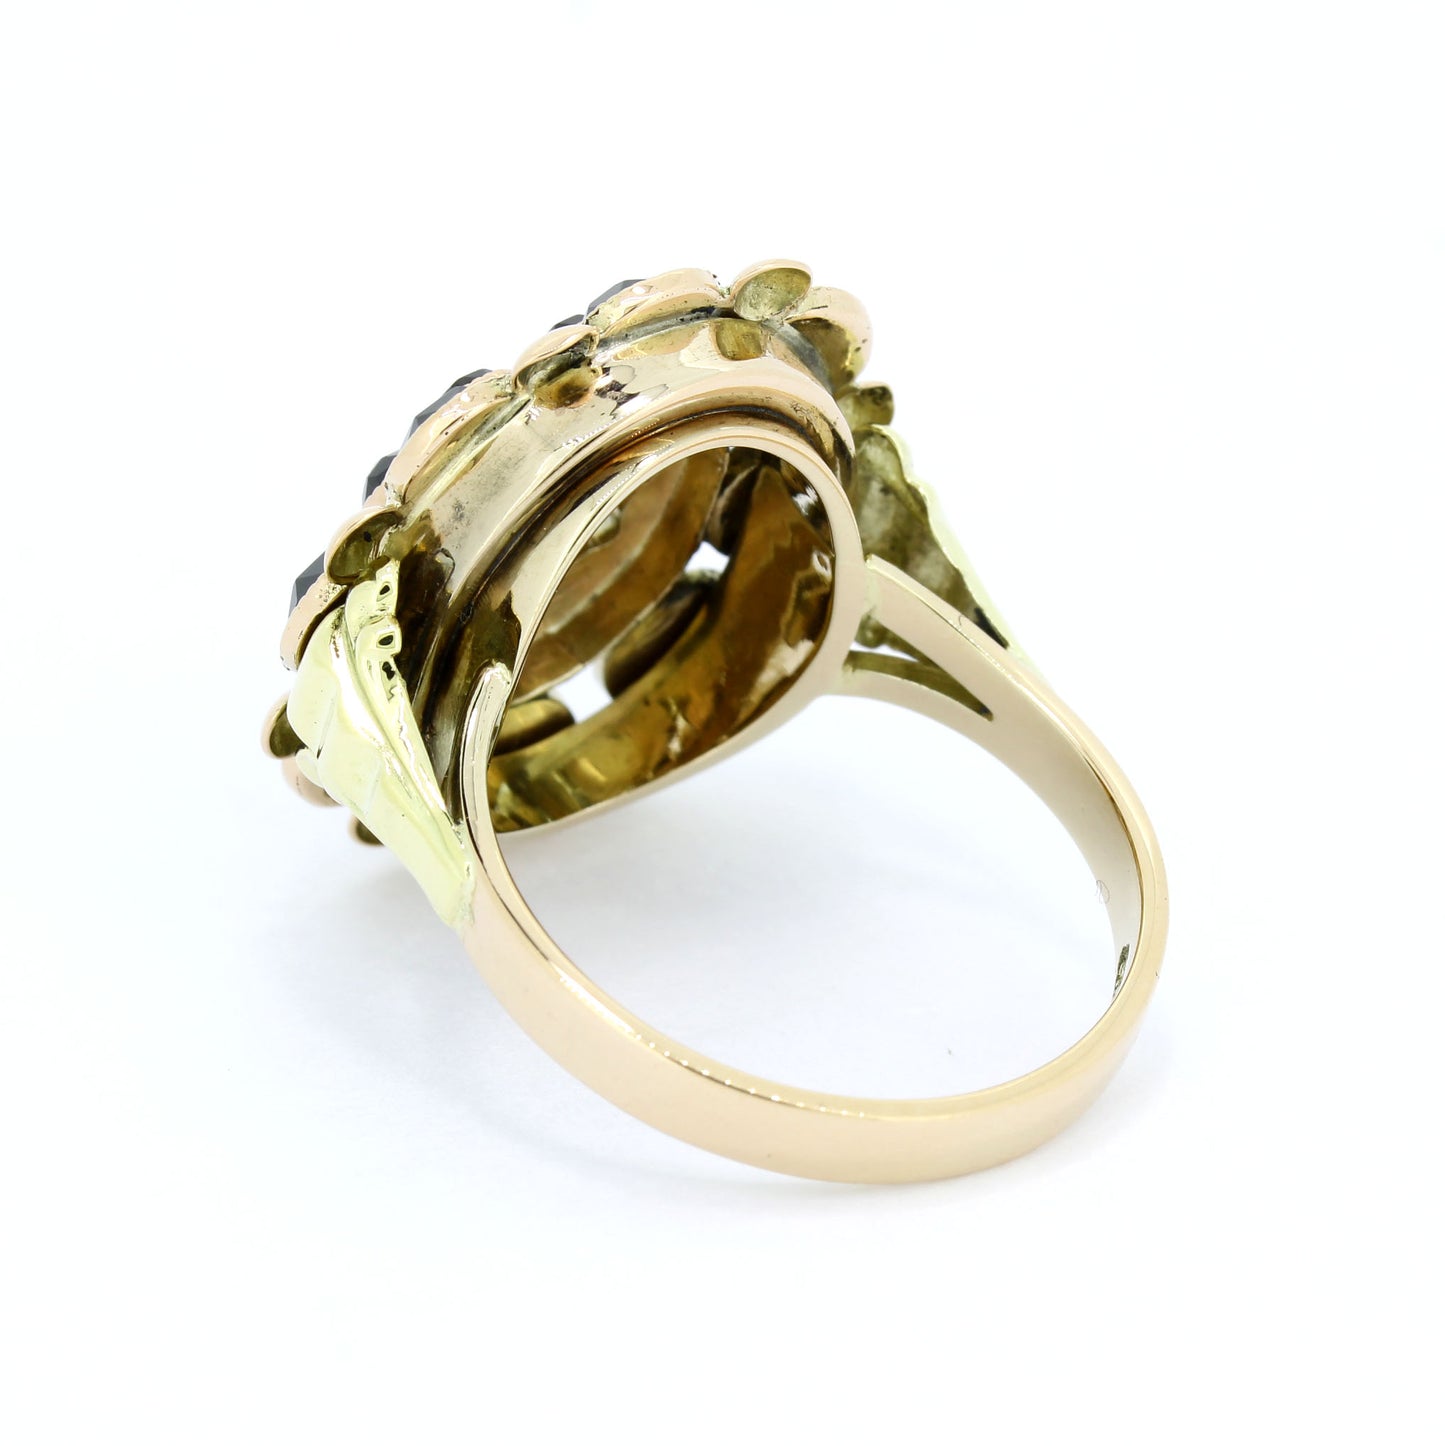 Antiker Ring 585 Gold Granat ca. 20er Jahre 14 Kt Gelbgold Rotgold Wert 860,-